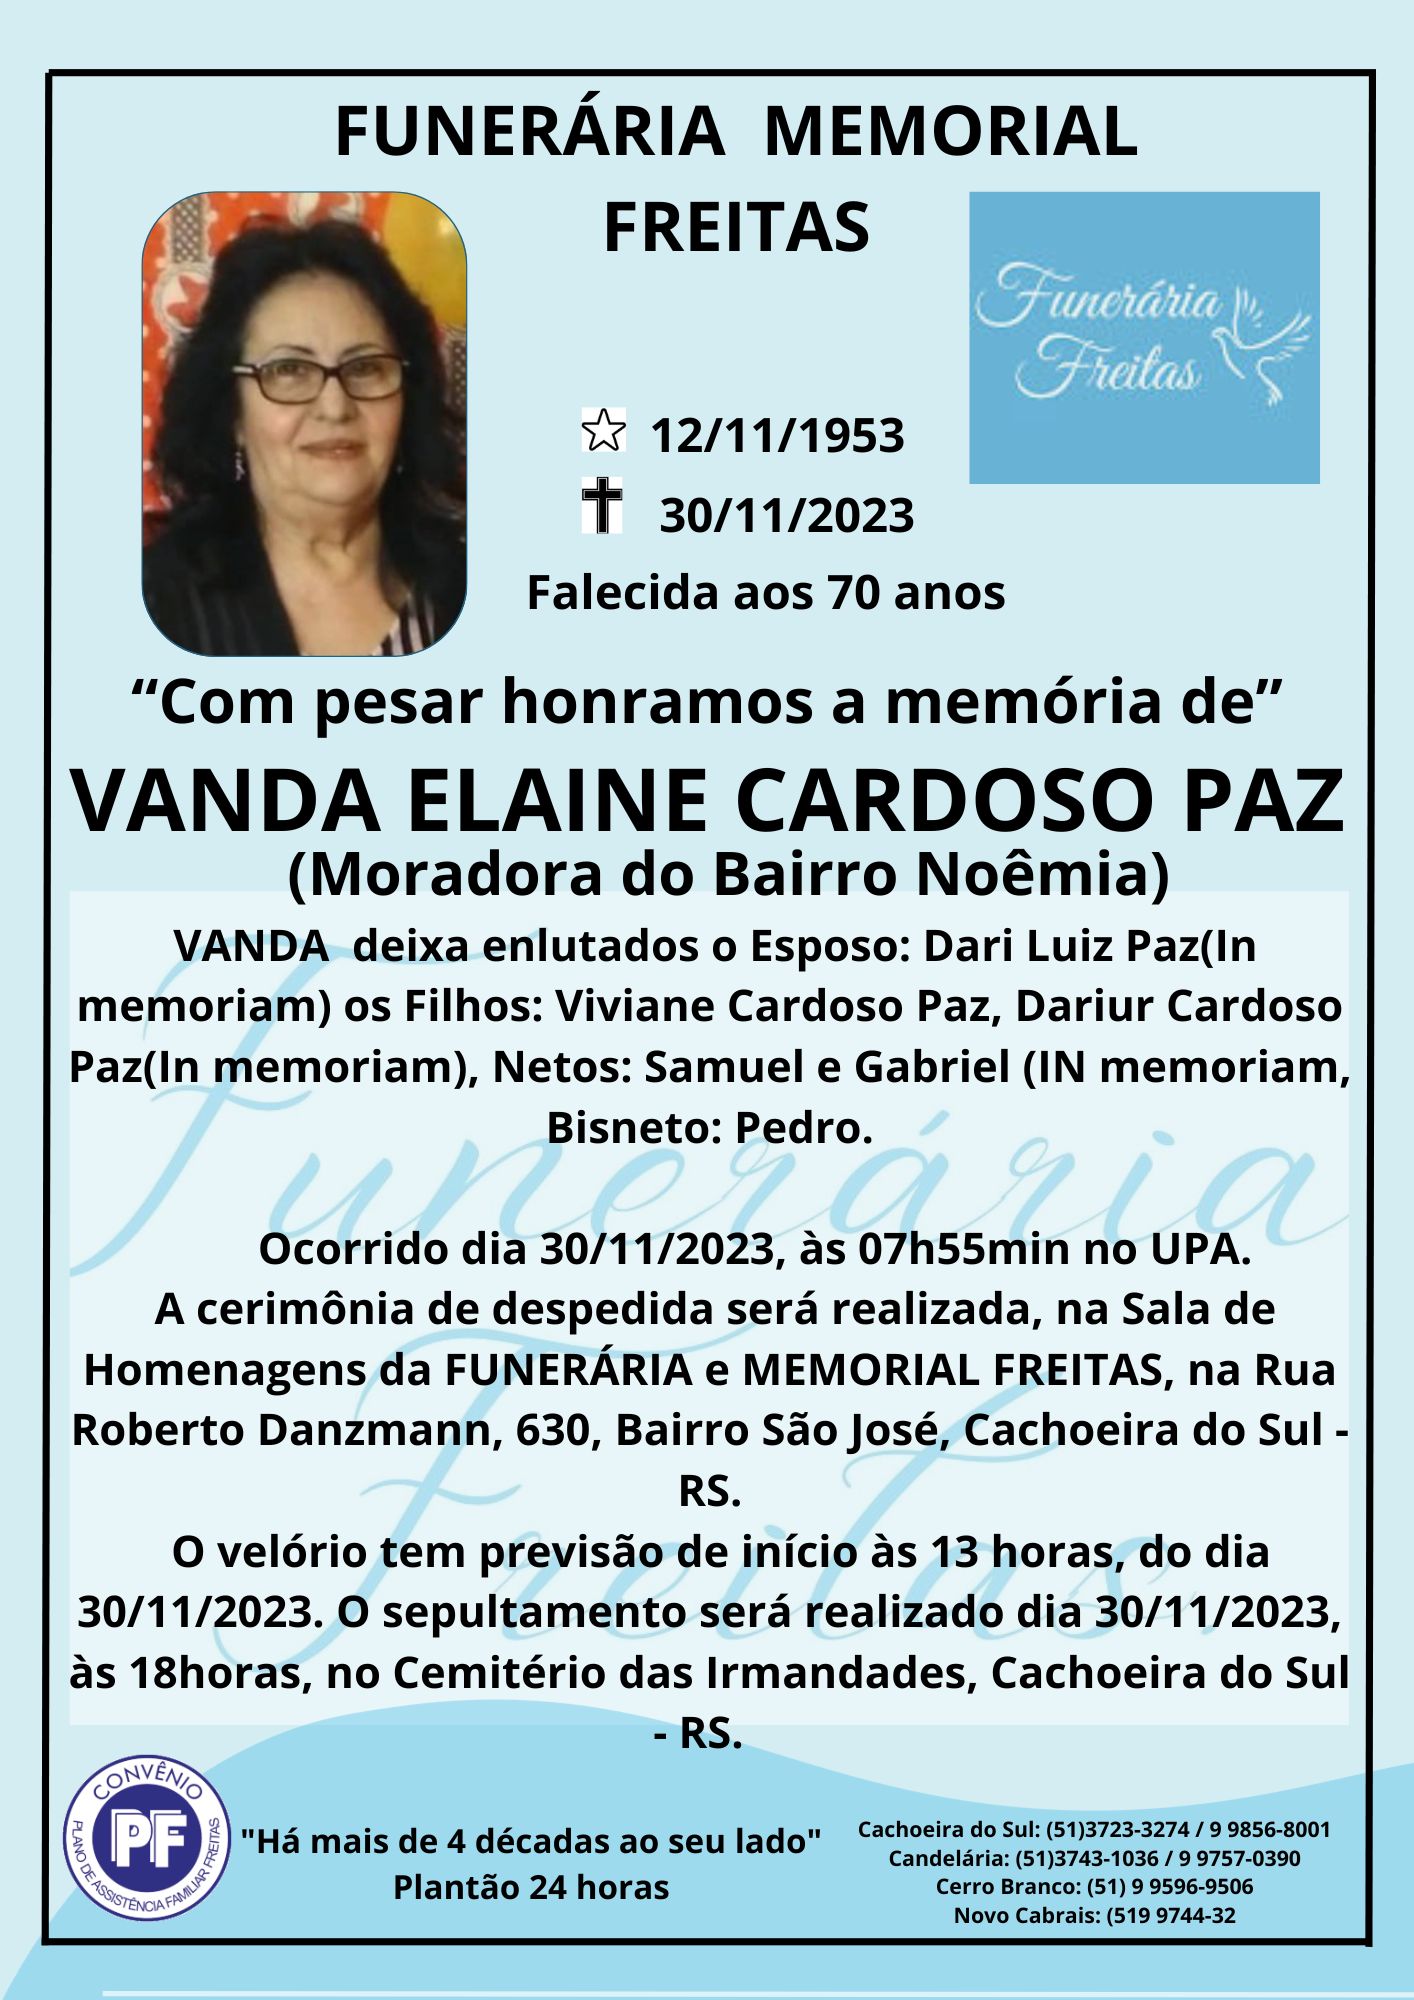 VANDA ELAINE CARDOSO PAZ